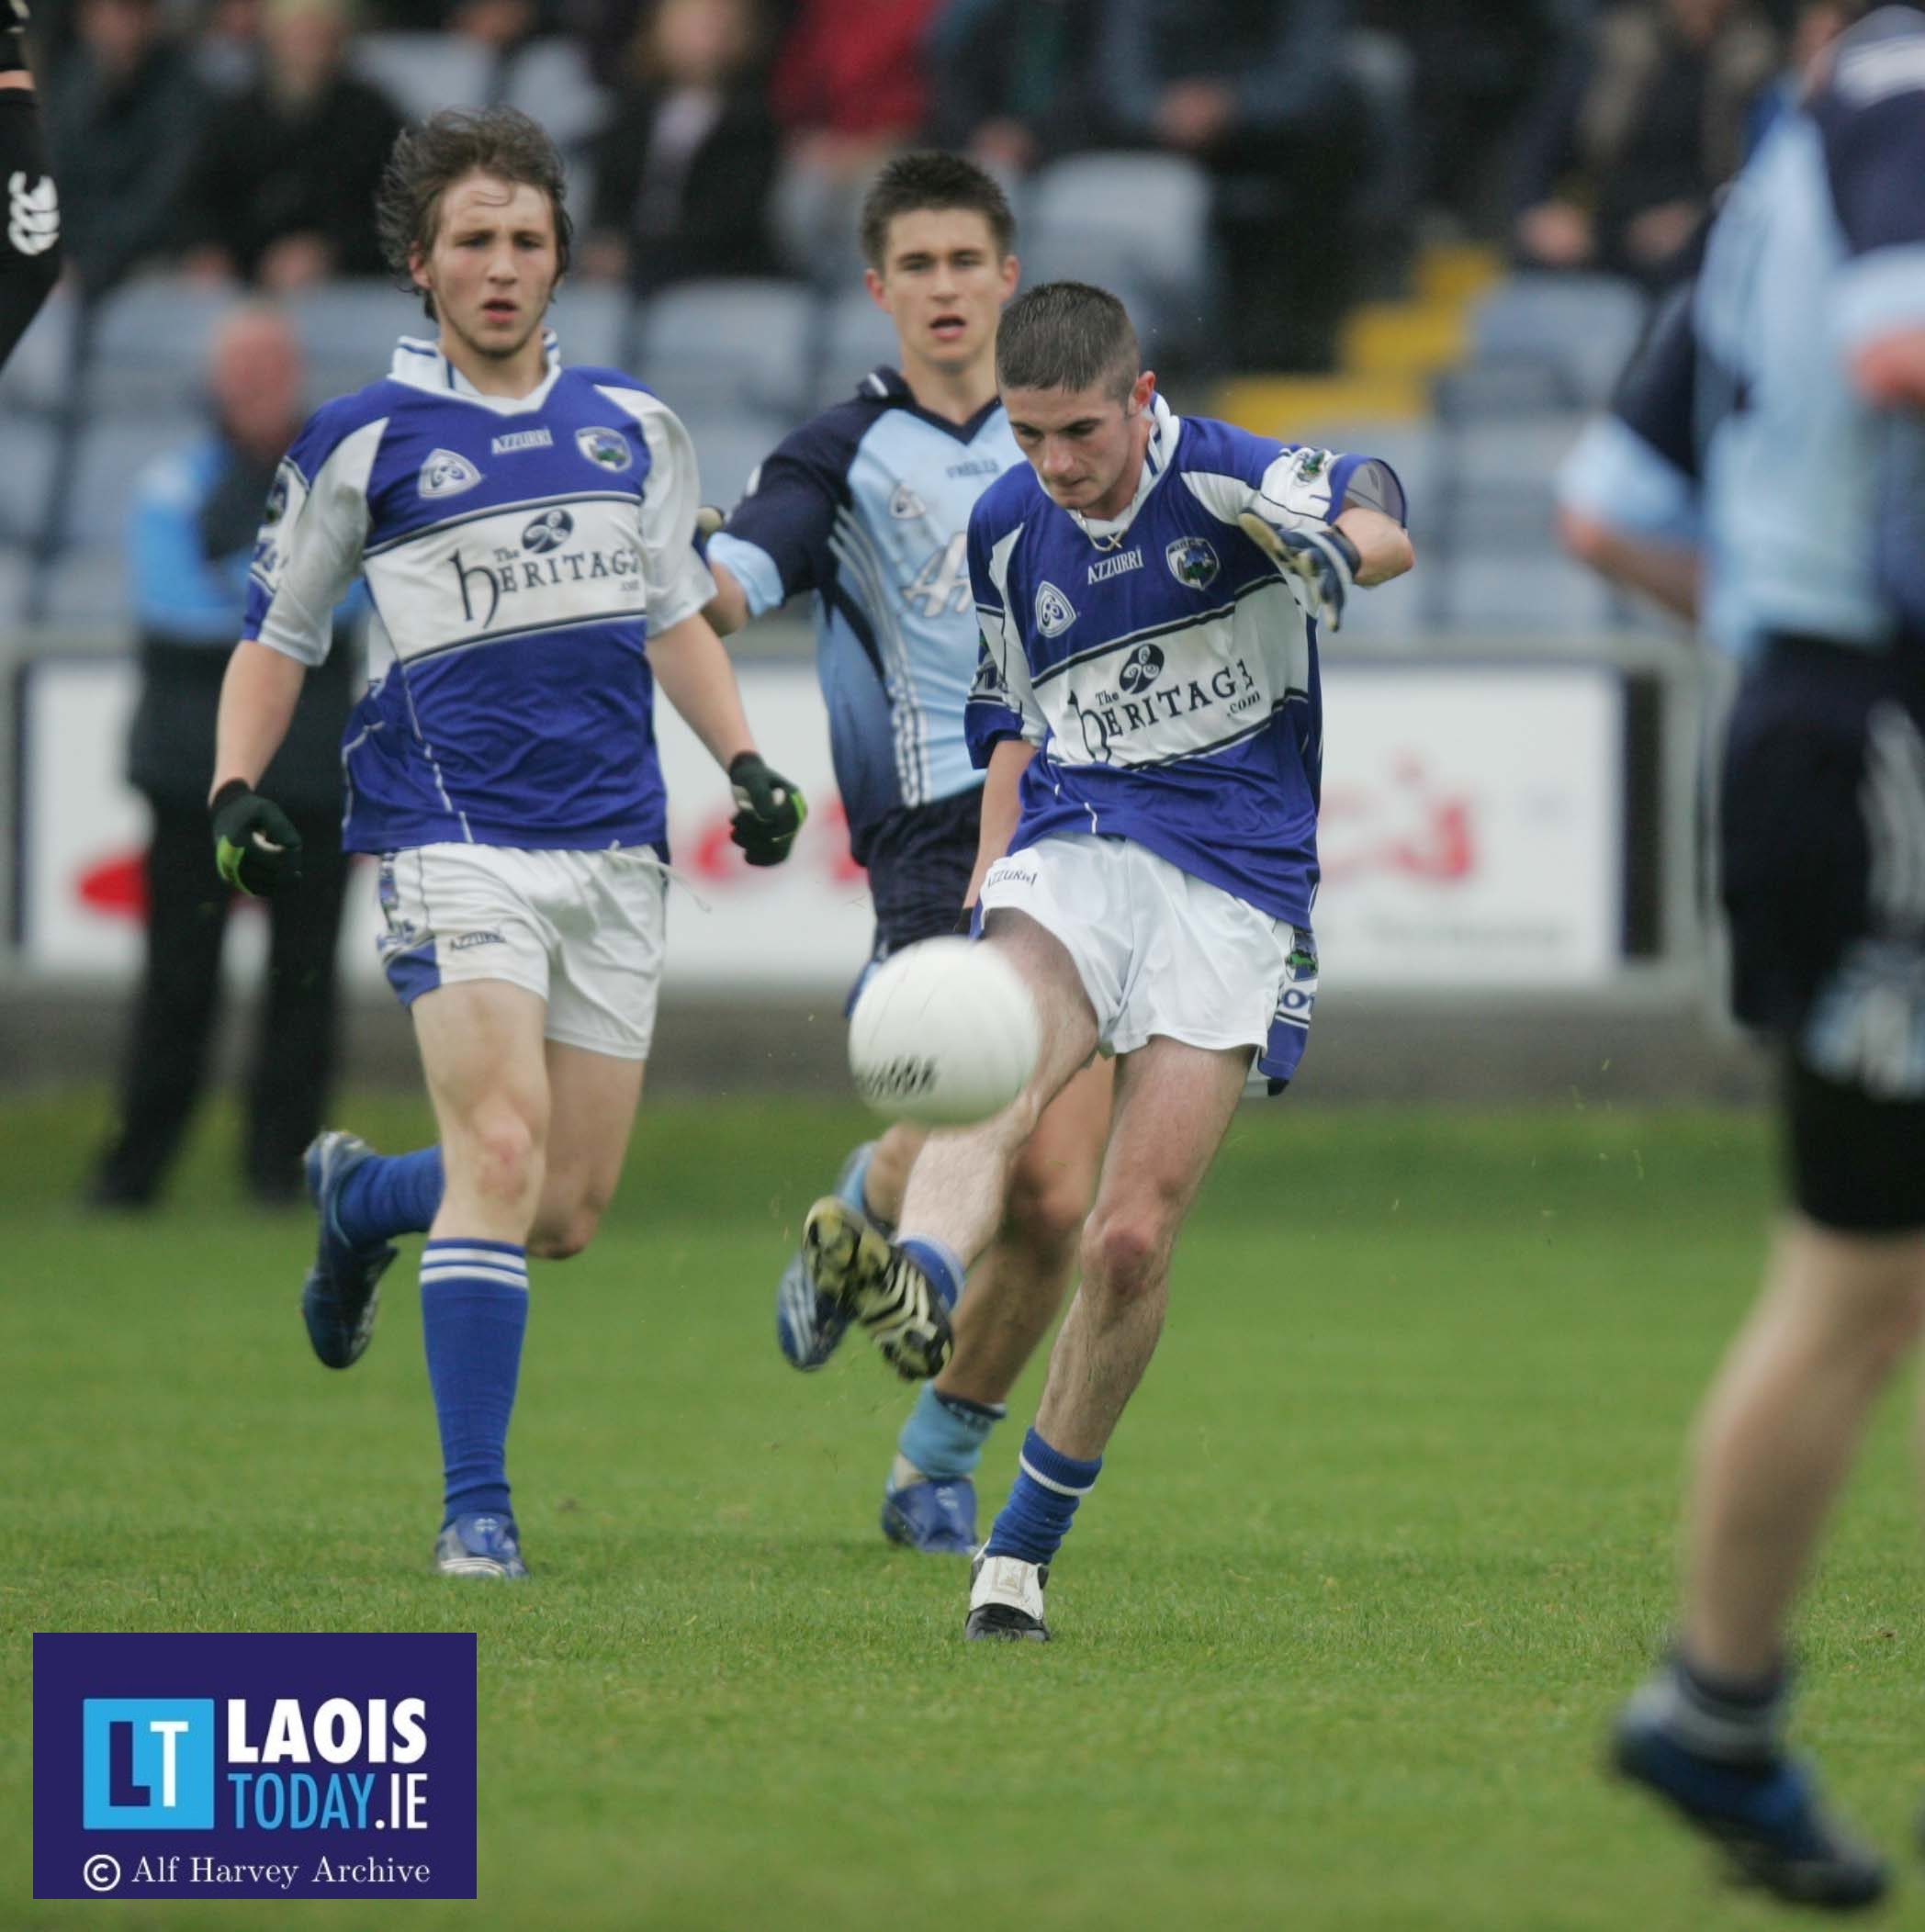 The Laois minor footballers beat Dublin in 2007